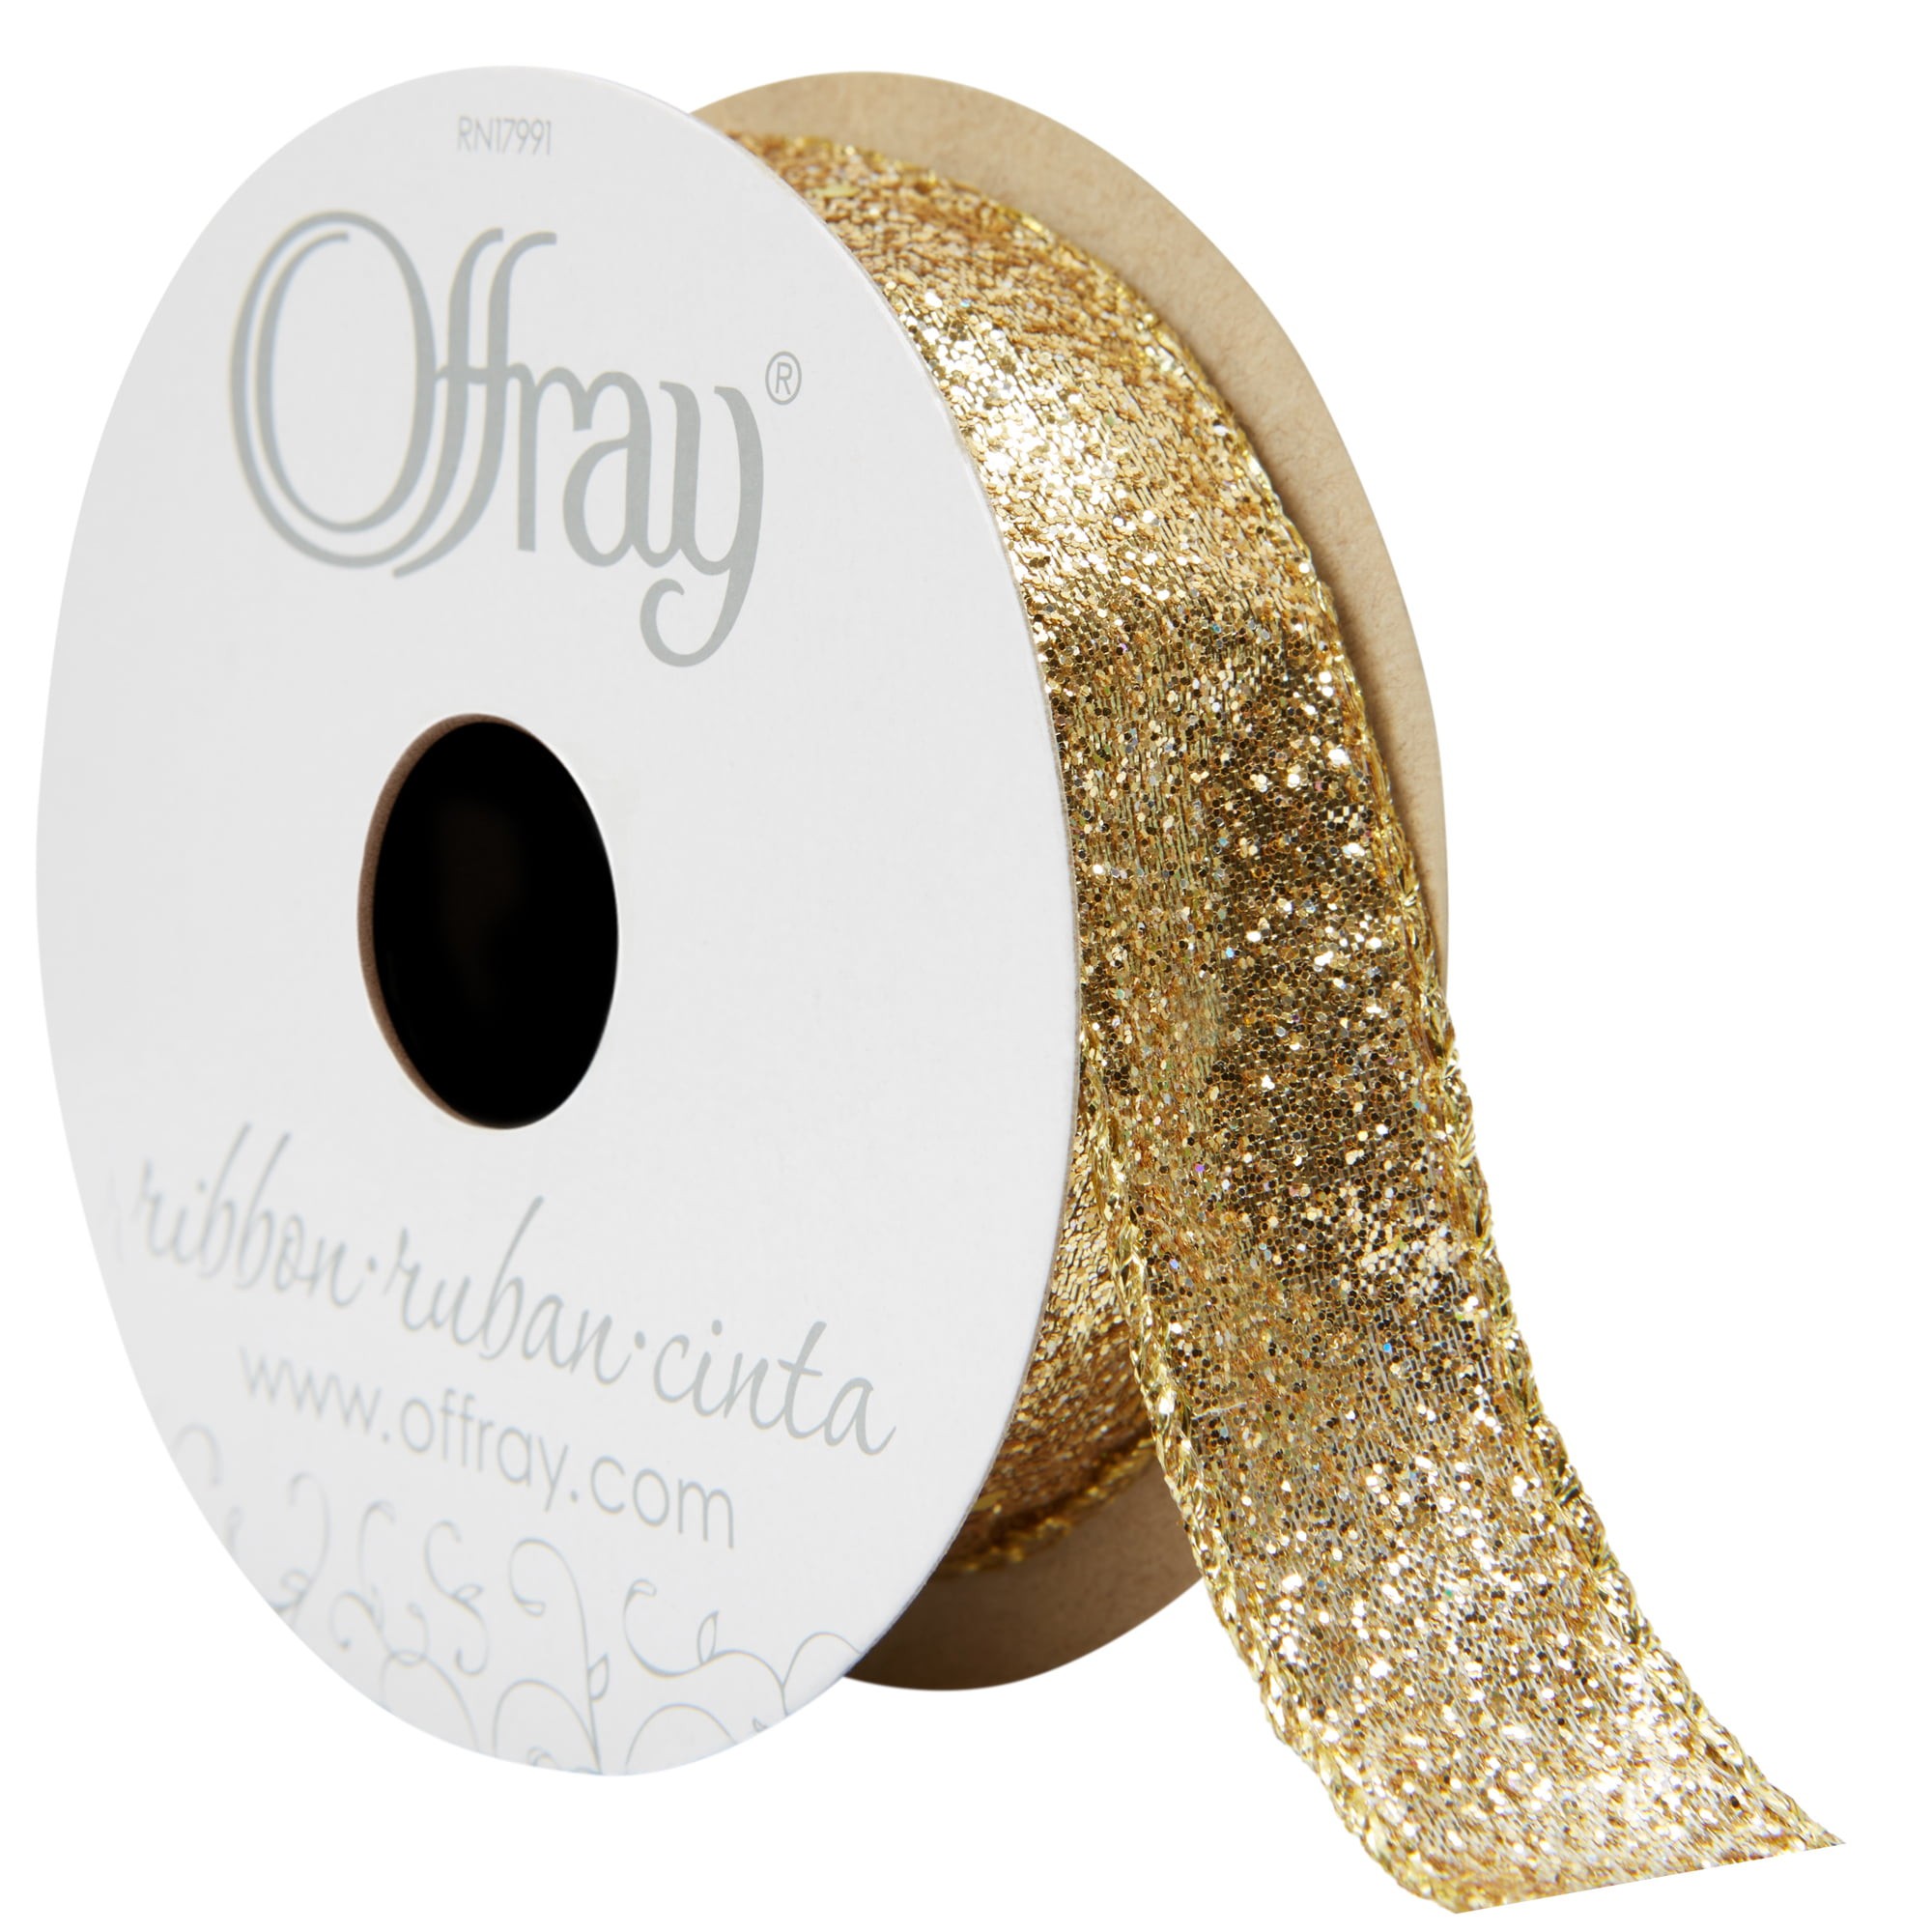 Offray Ribbon, Metallic Gold 1 1/2 inch Wired Edge Metallic Ribbon, 9 feet  